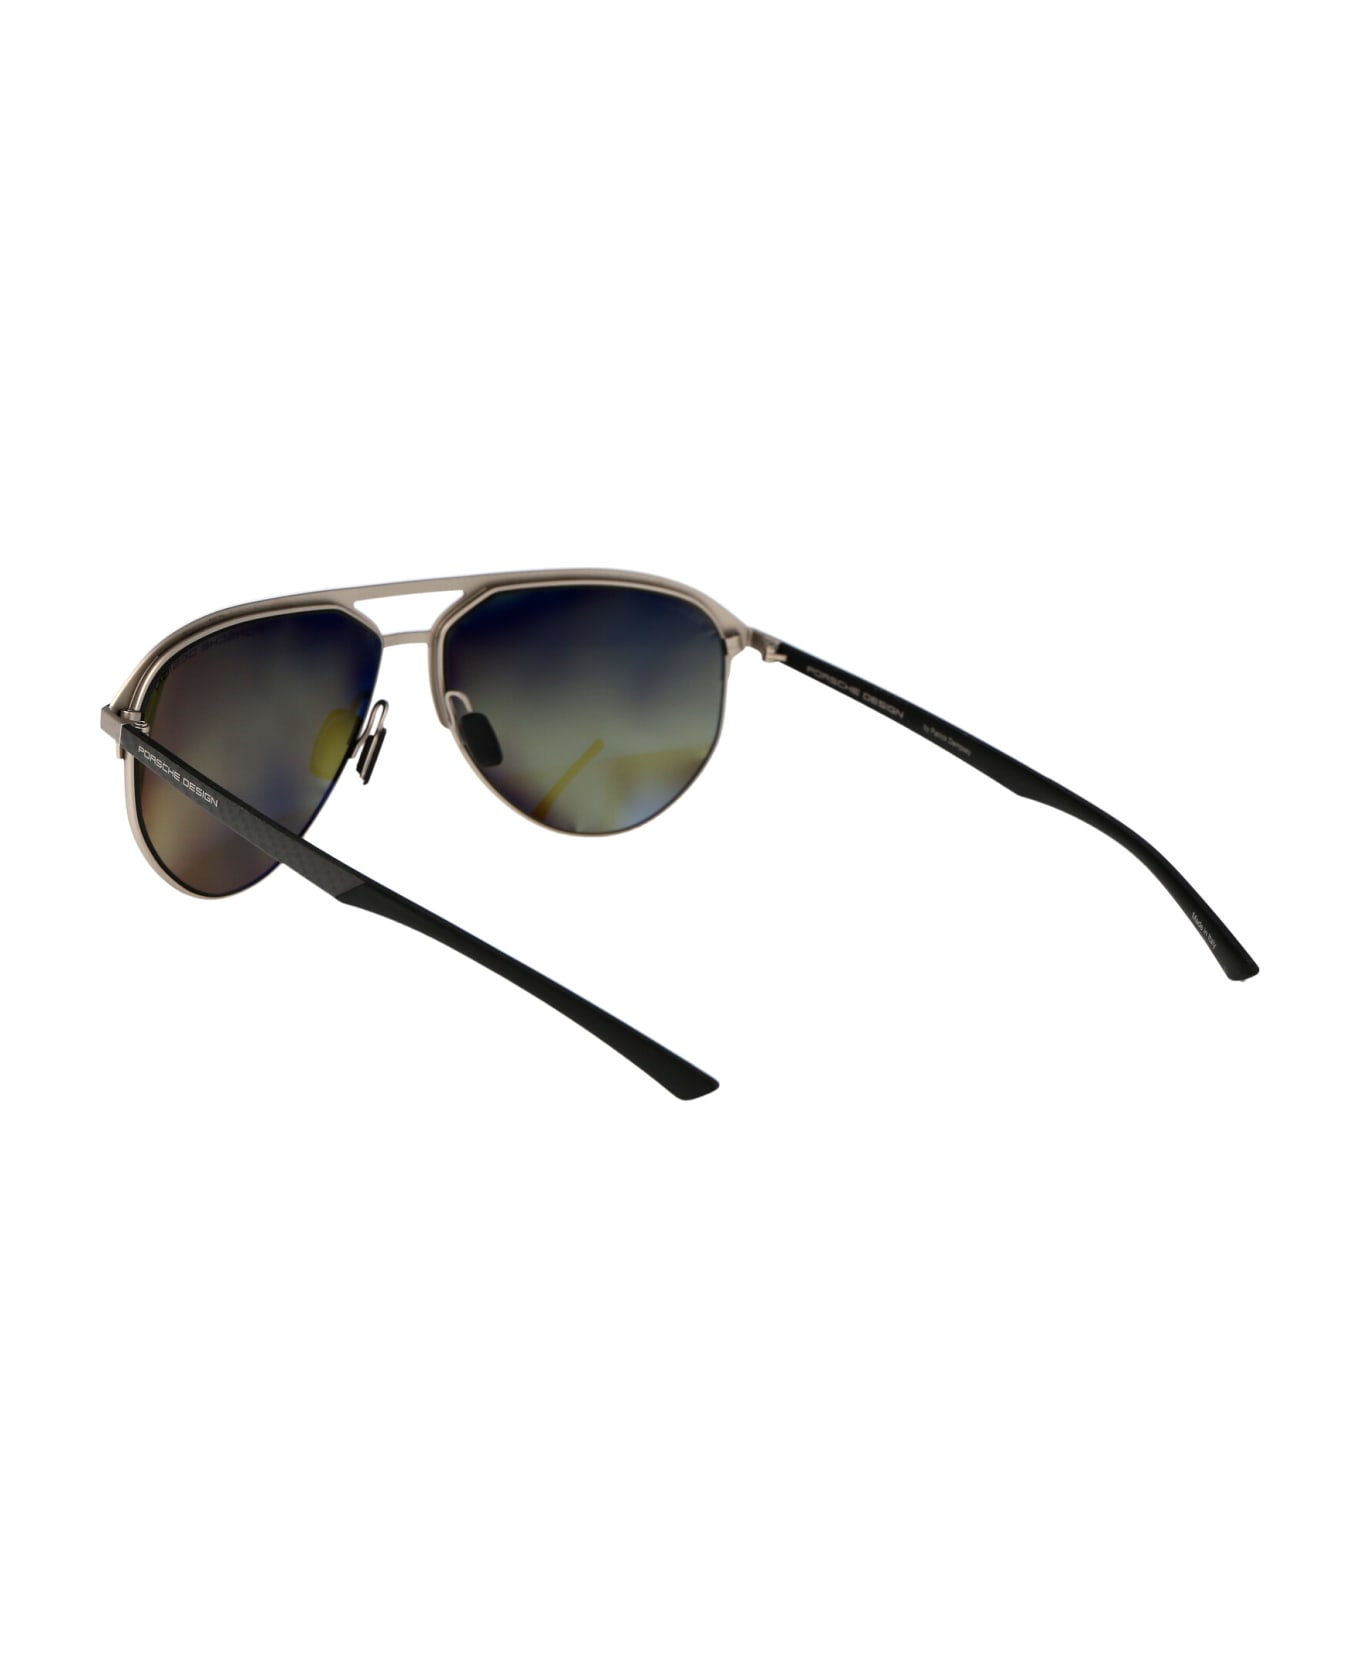 Porsche Design P8965 Sunglasses - B417 GREY BLACK